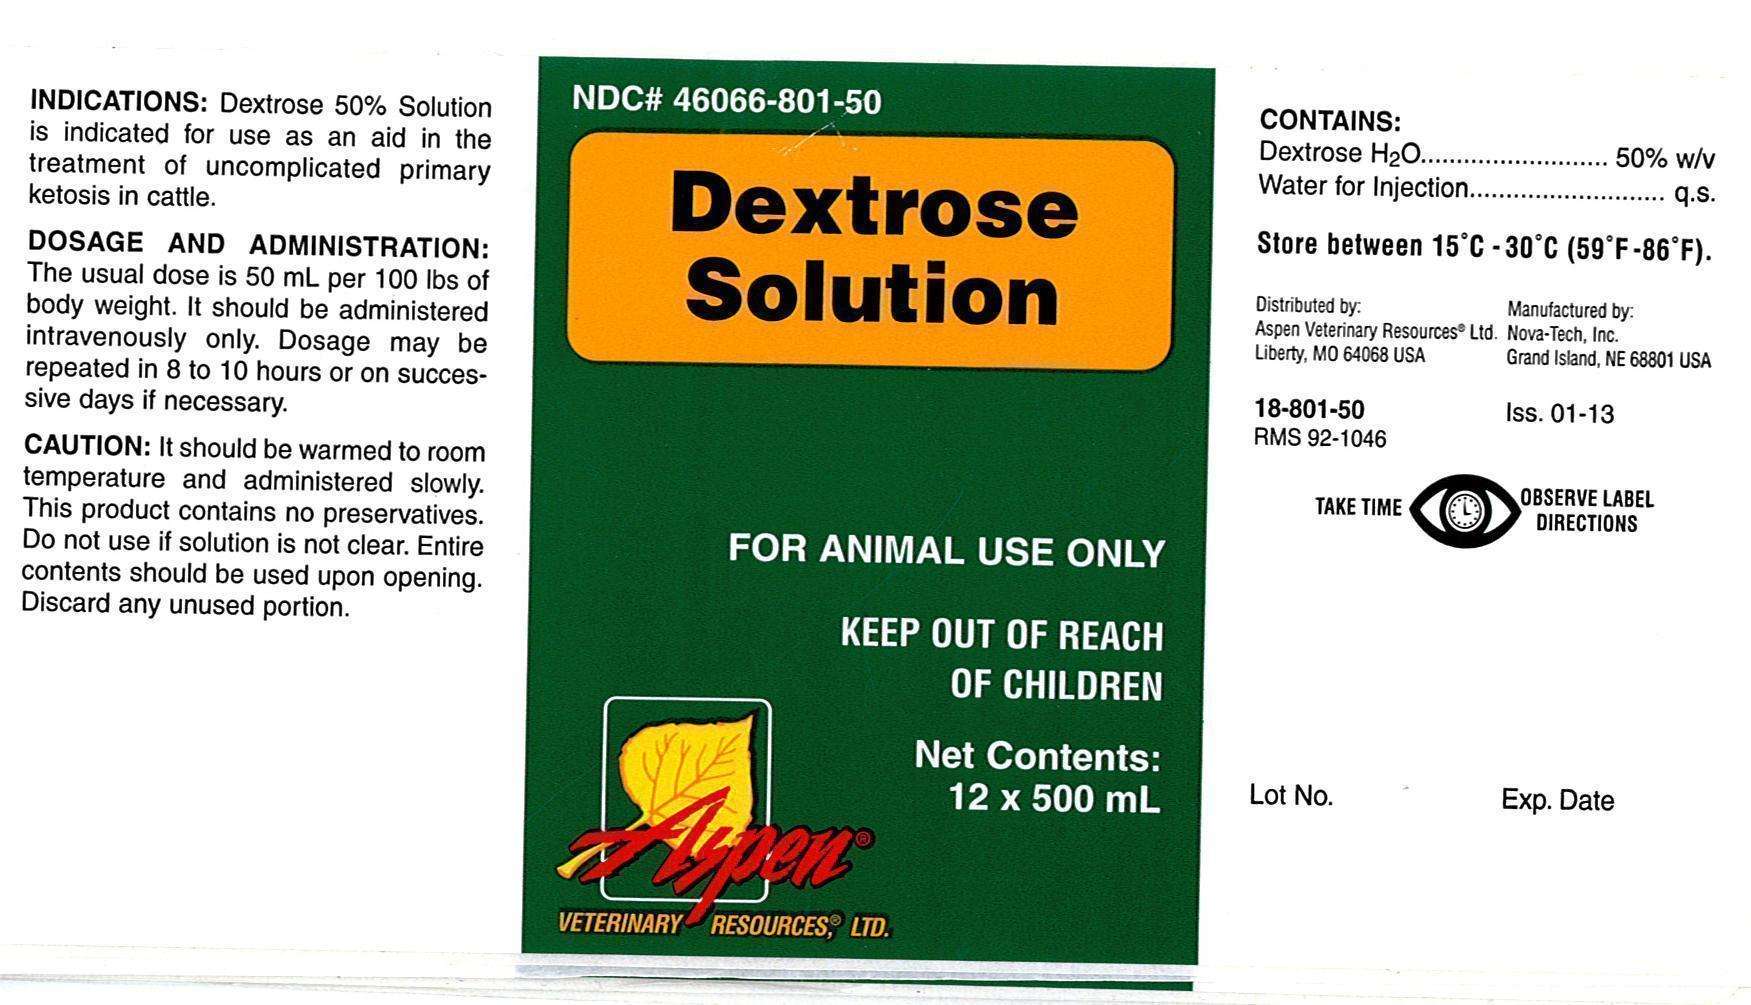 Dextrose Solution